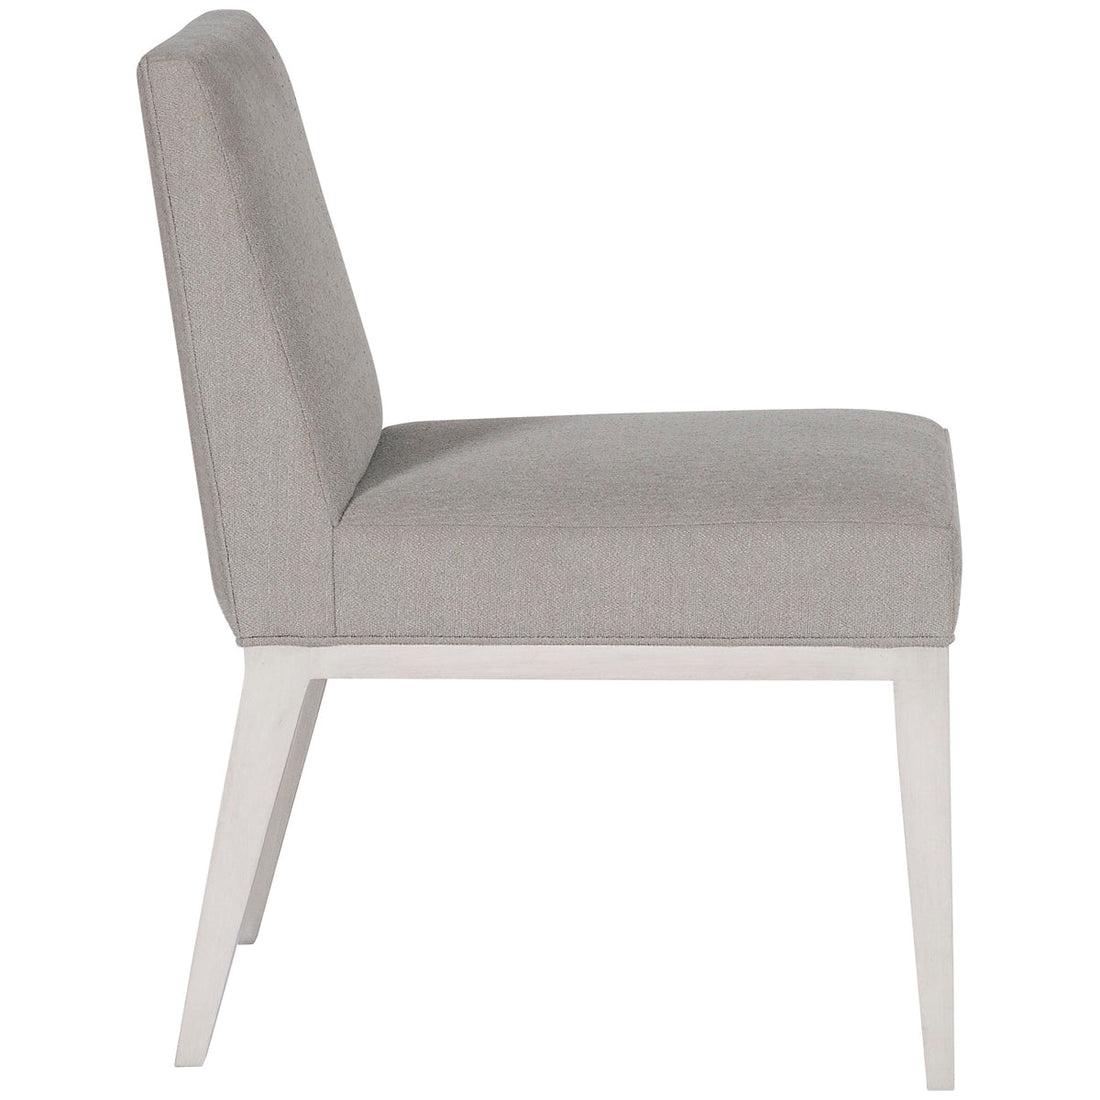 Vanguard Furniture Rudin Plain Back Side Chair